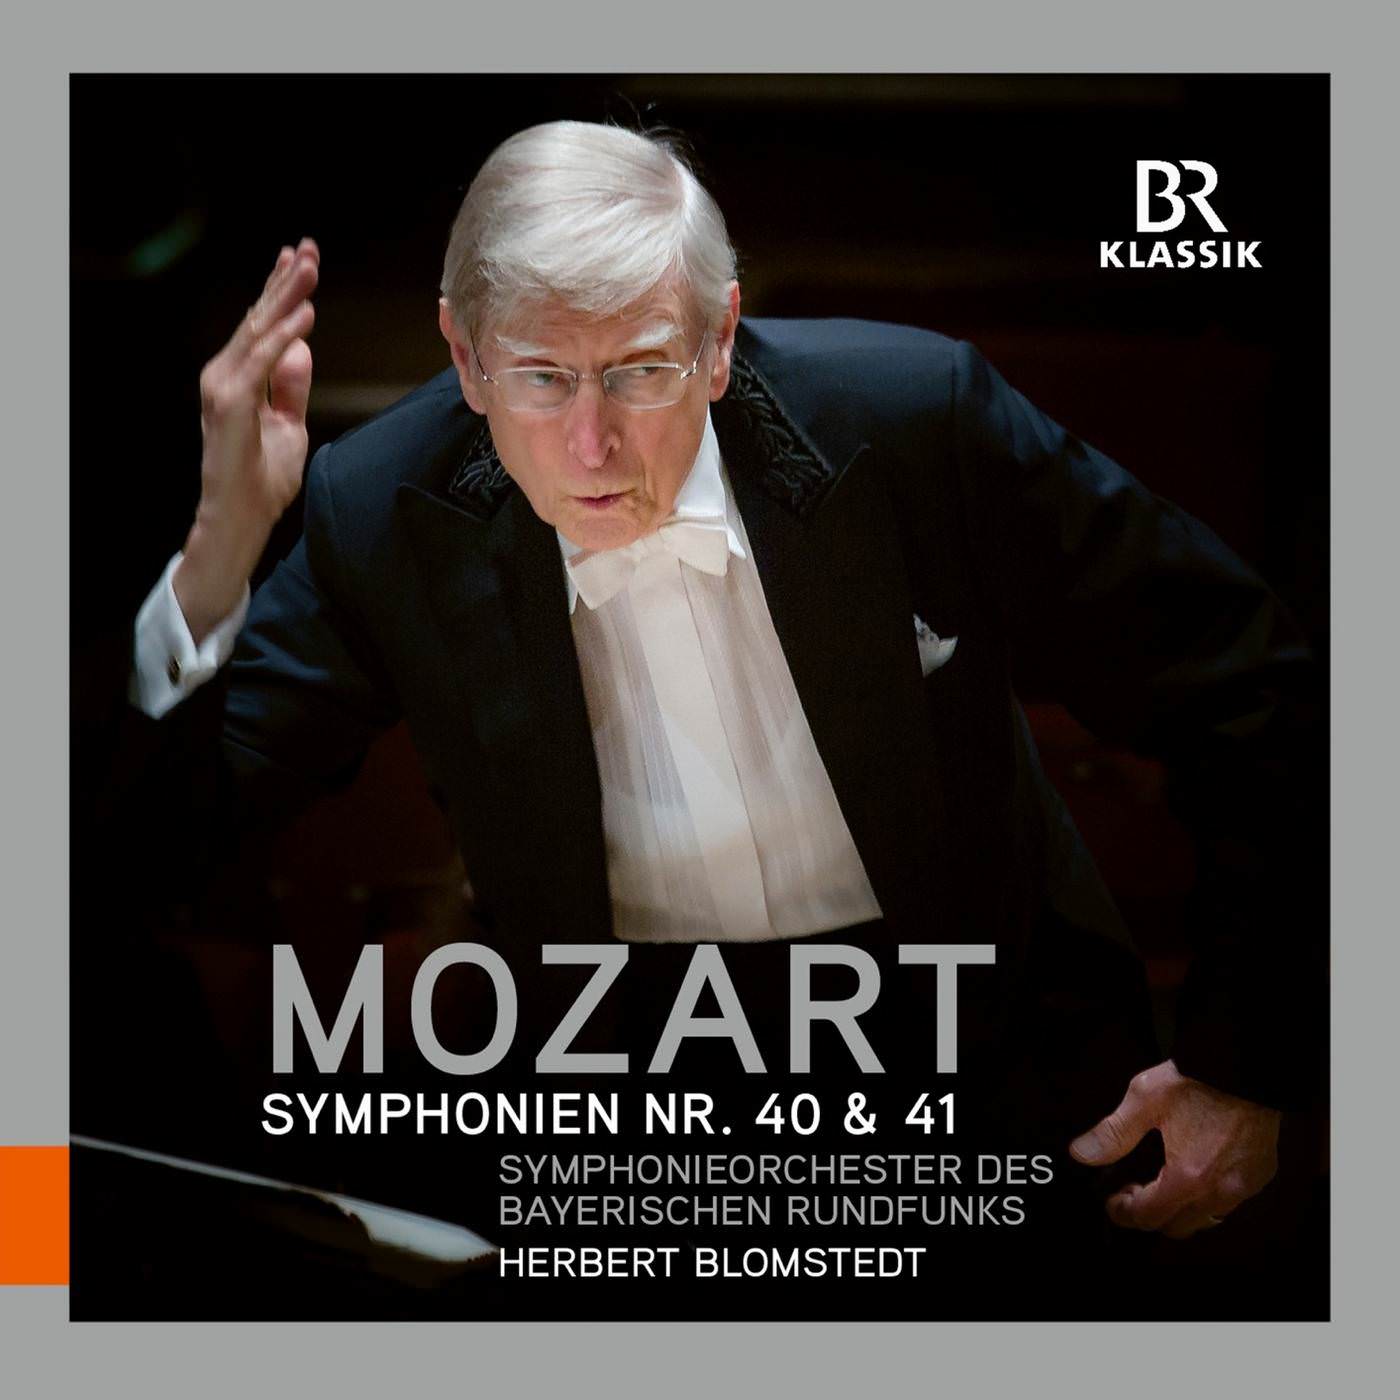 Symphonieorchester des Bayerischen Rundfunks & Herbert Blomstedt - Mozart: Symphonies Nos. 40 & 41 (2018) [FLAC 24bit/48kHz]